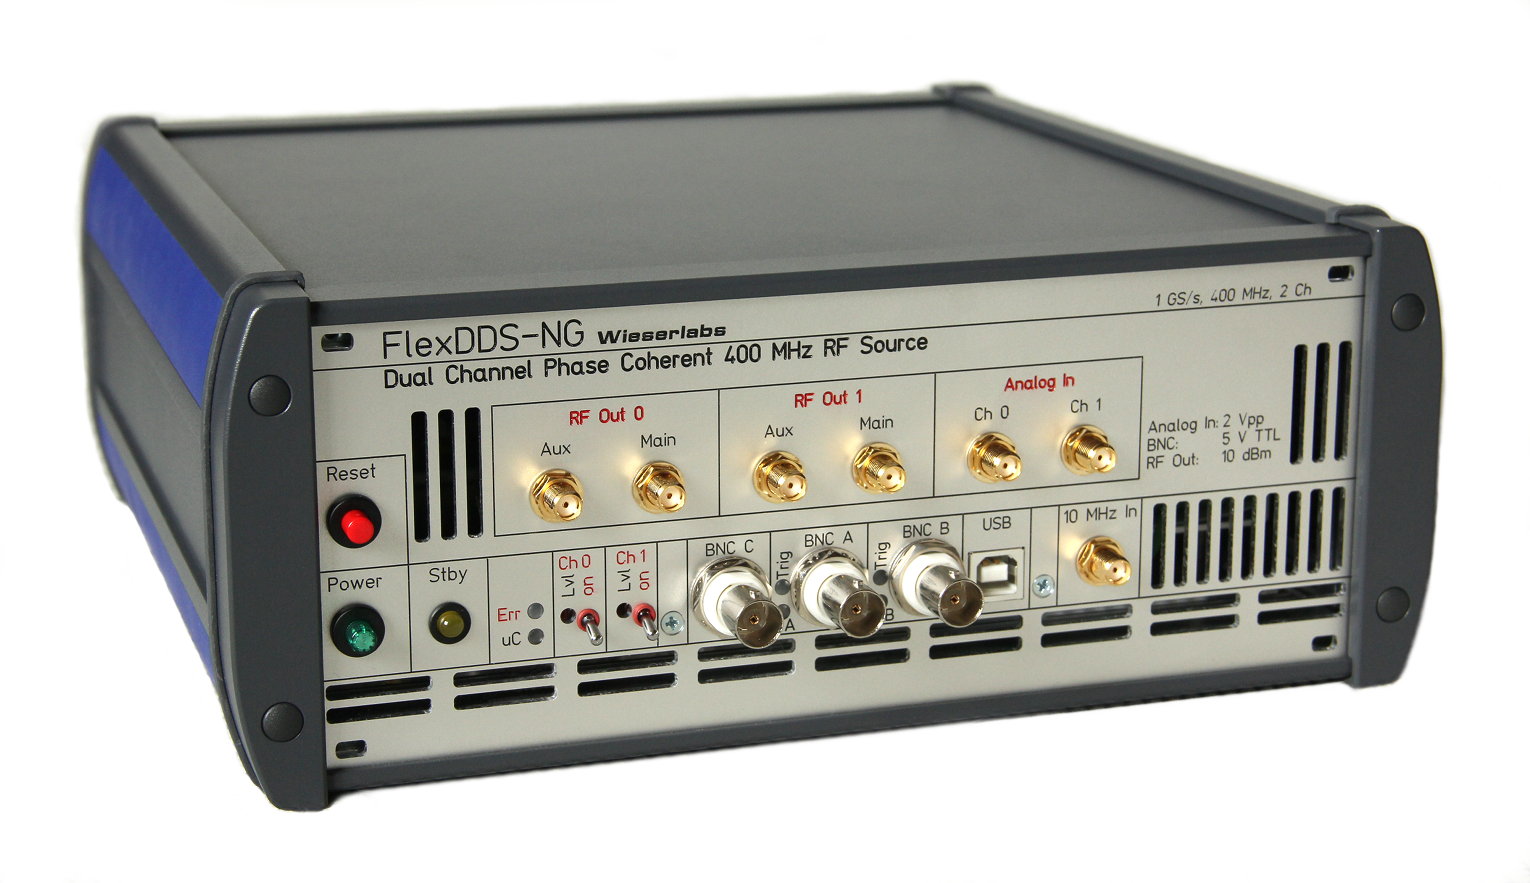 WL-FlexDDS-NG-DUAL Radio Frequency Generators Zoom Image